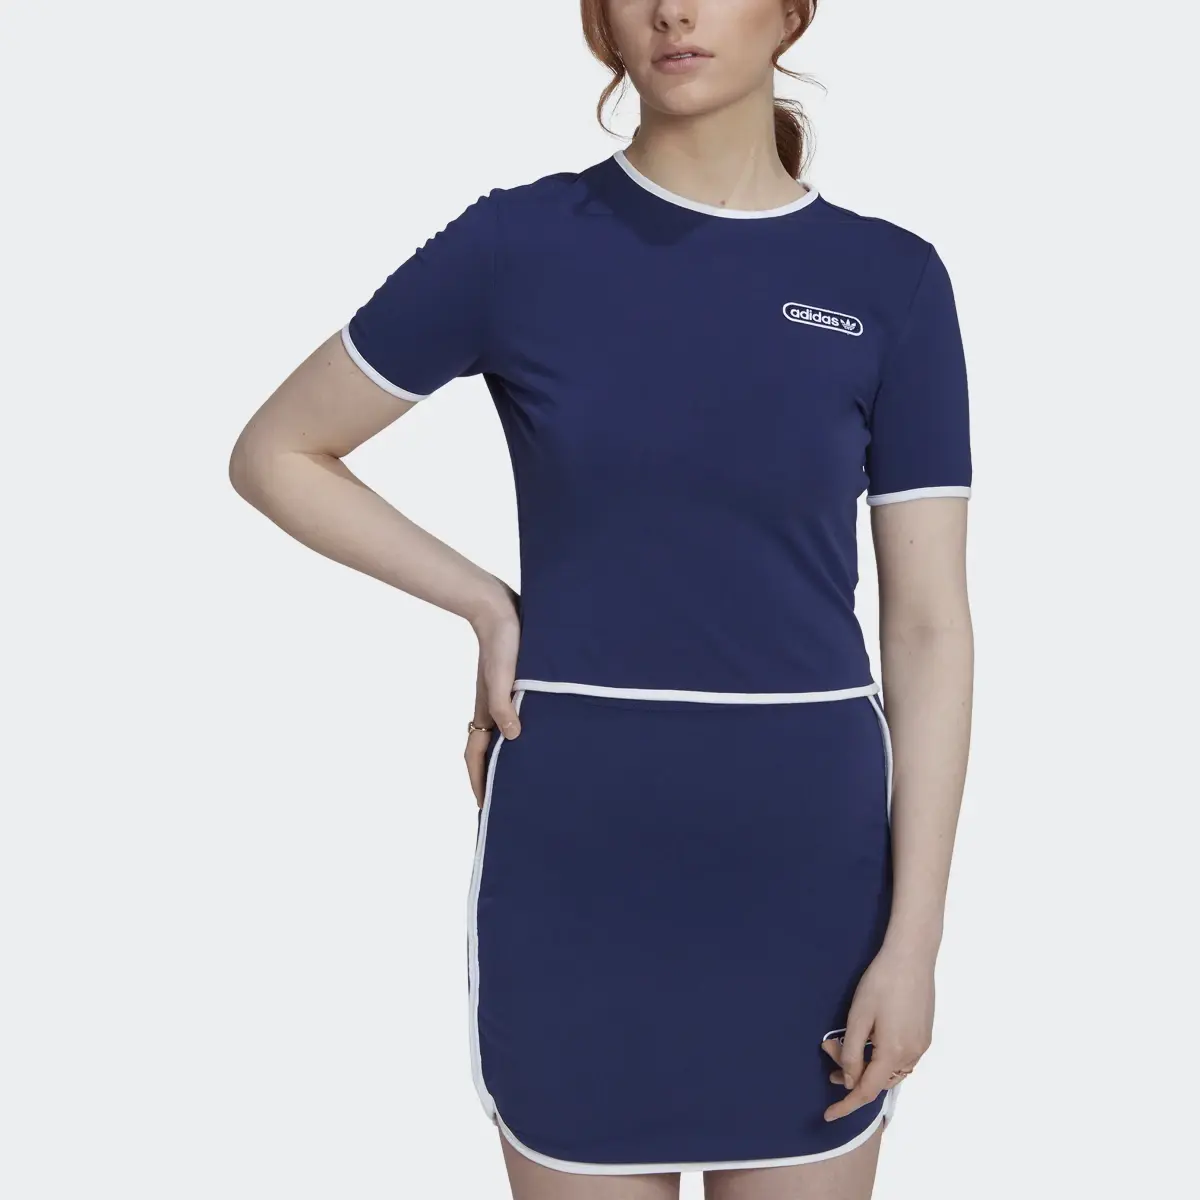 Adidas T-shirt Crop with Binding Details. 1